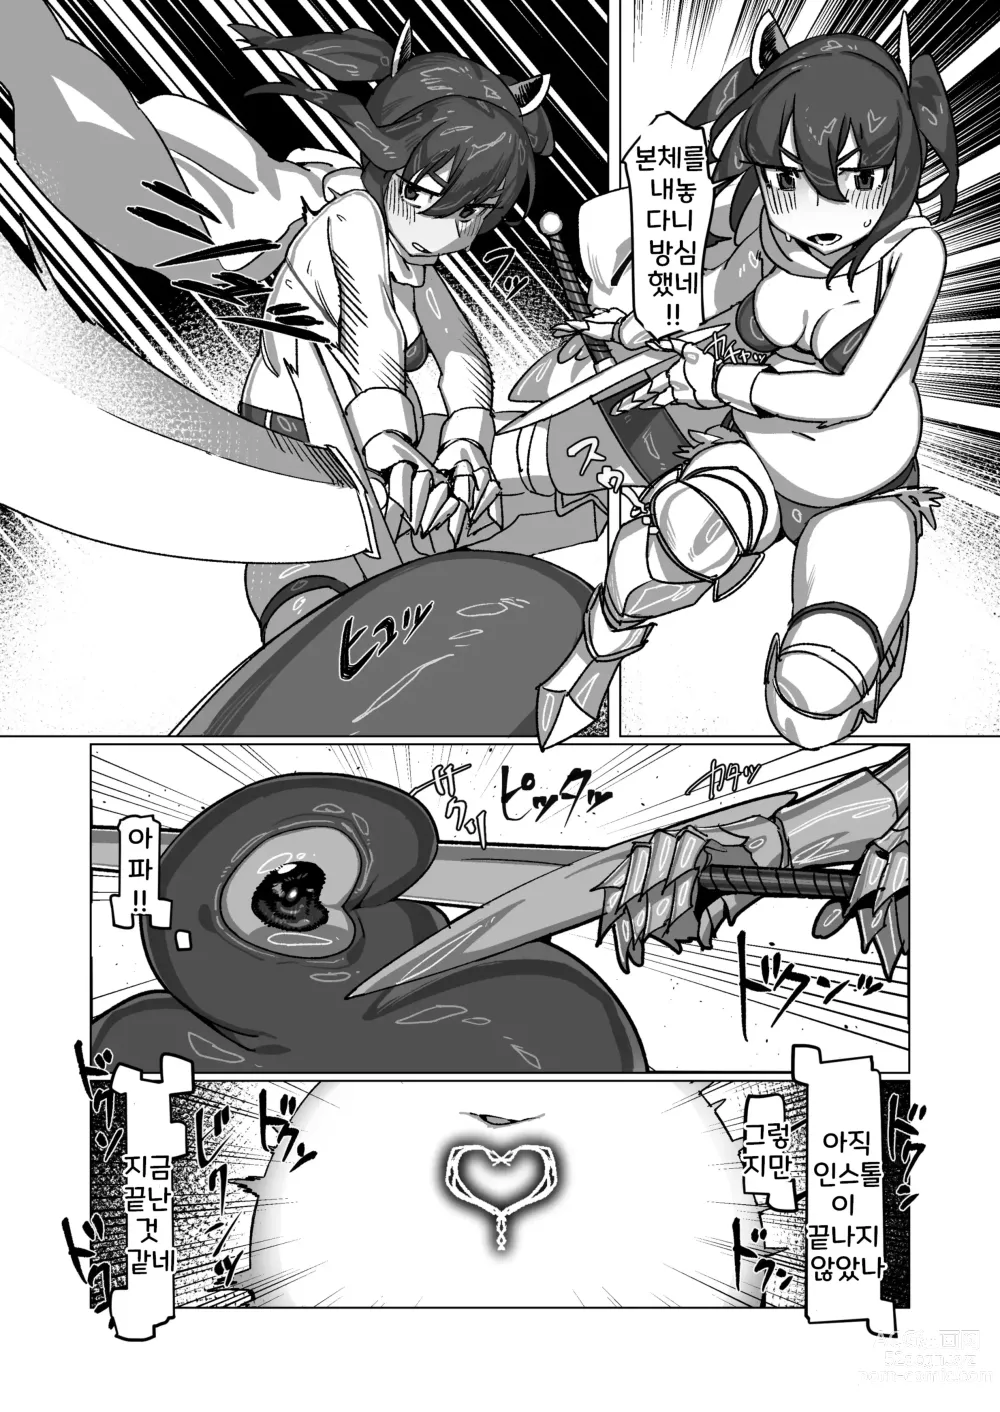 Page 11 of doujinshi 자신을 토호쿠 키리타 라고 믿고있는 키리탄의 풀 다이브 VR 던전